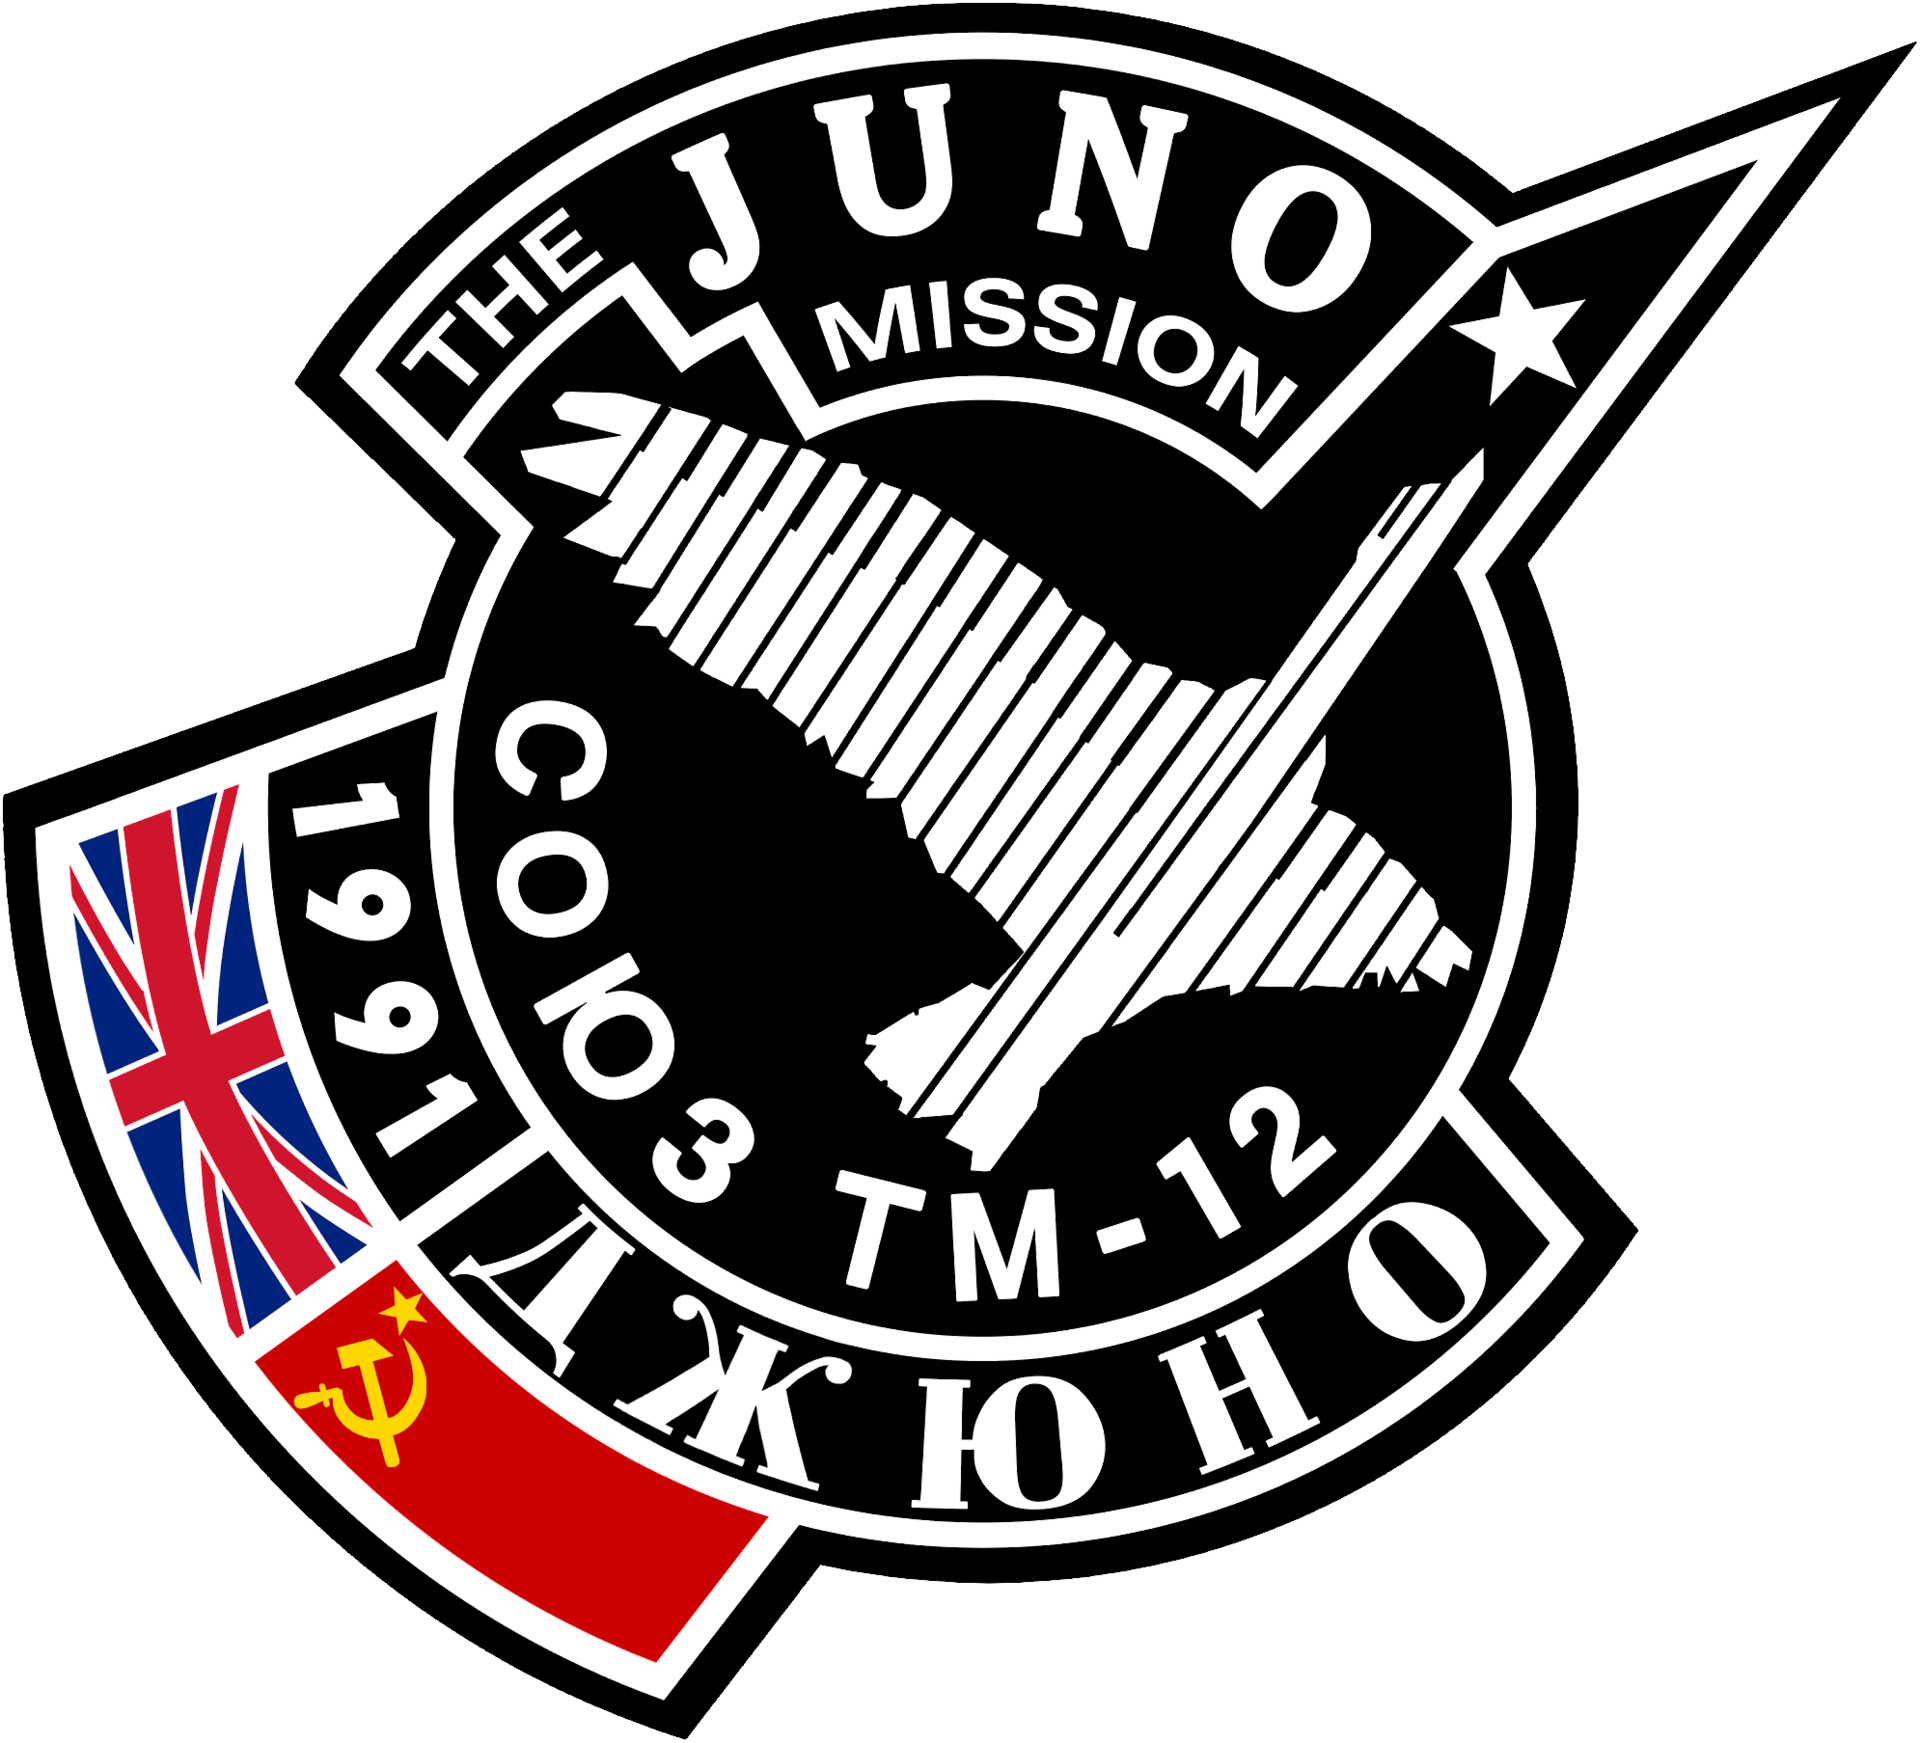 Mission patch for Soyuz TM-12